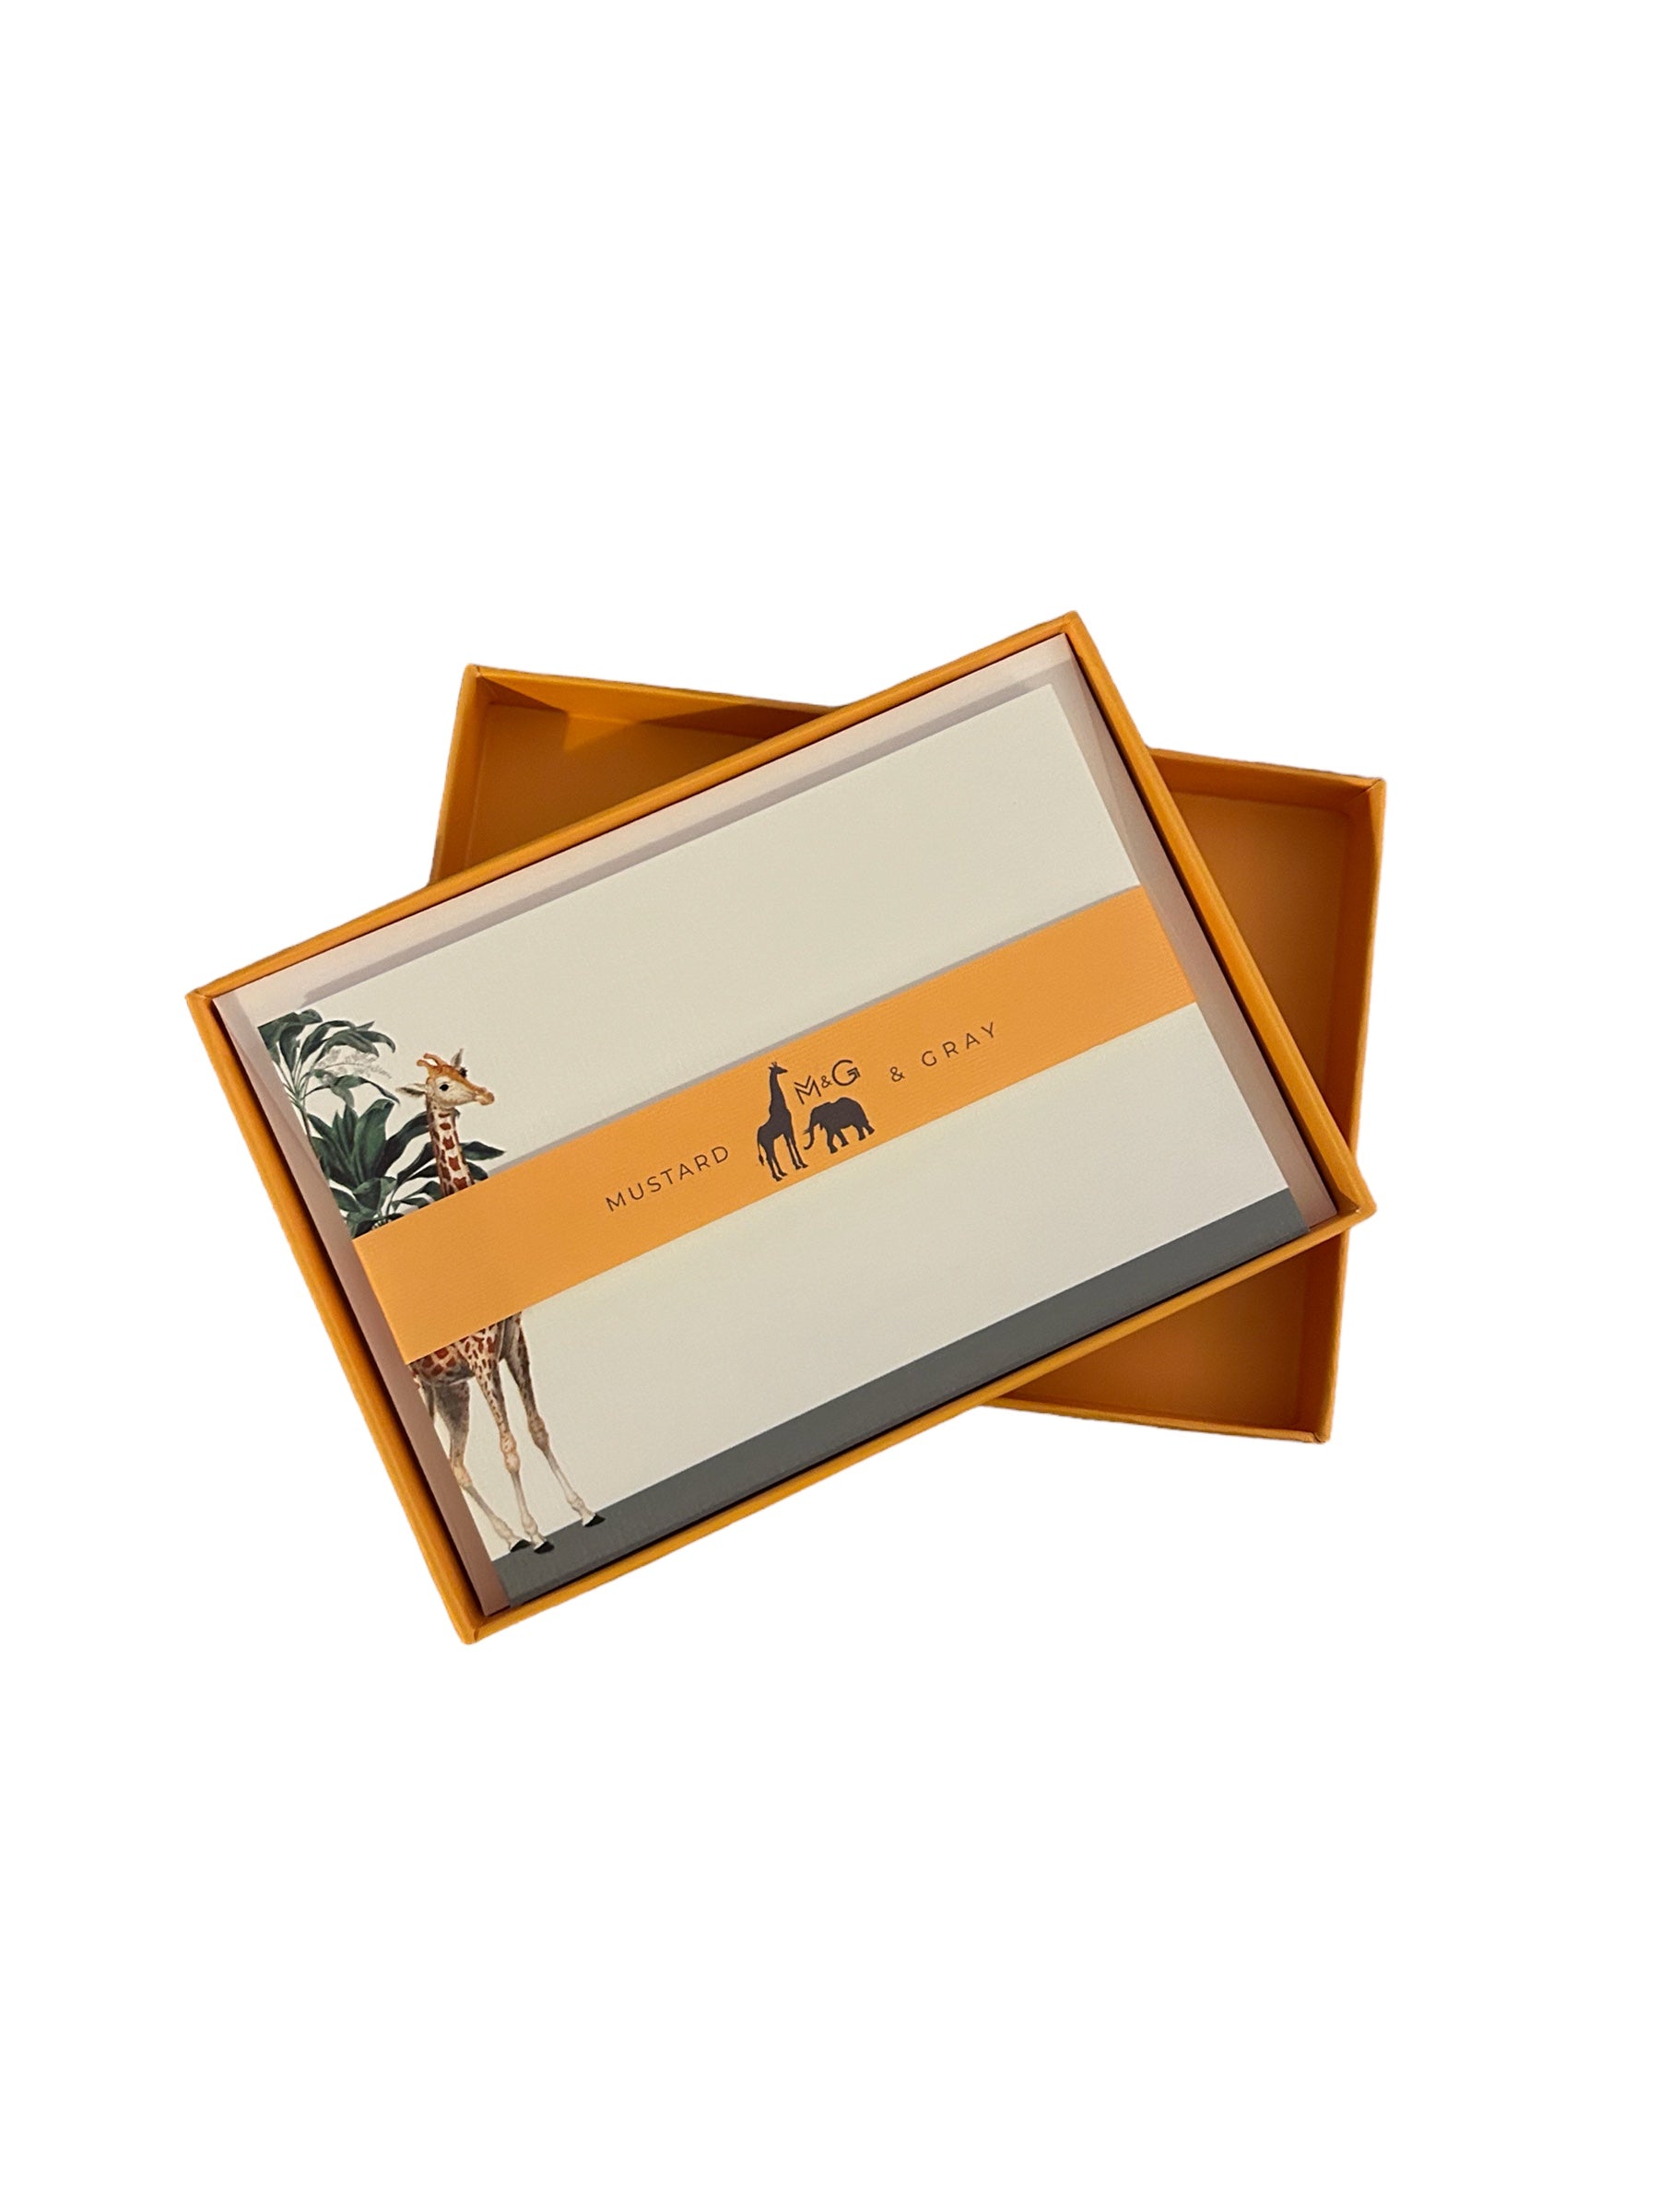 Darwin's Menagerie "Grand Giraffe" Notecard Set with Laid Envelopes